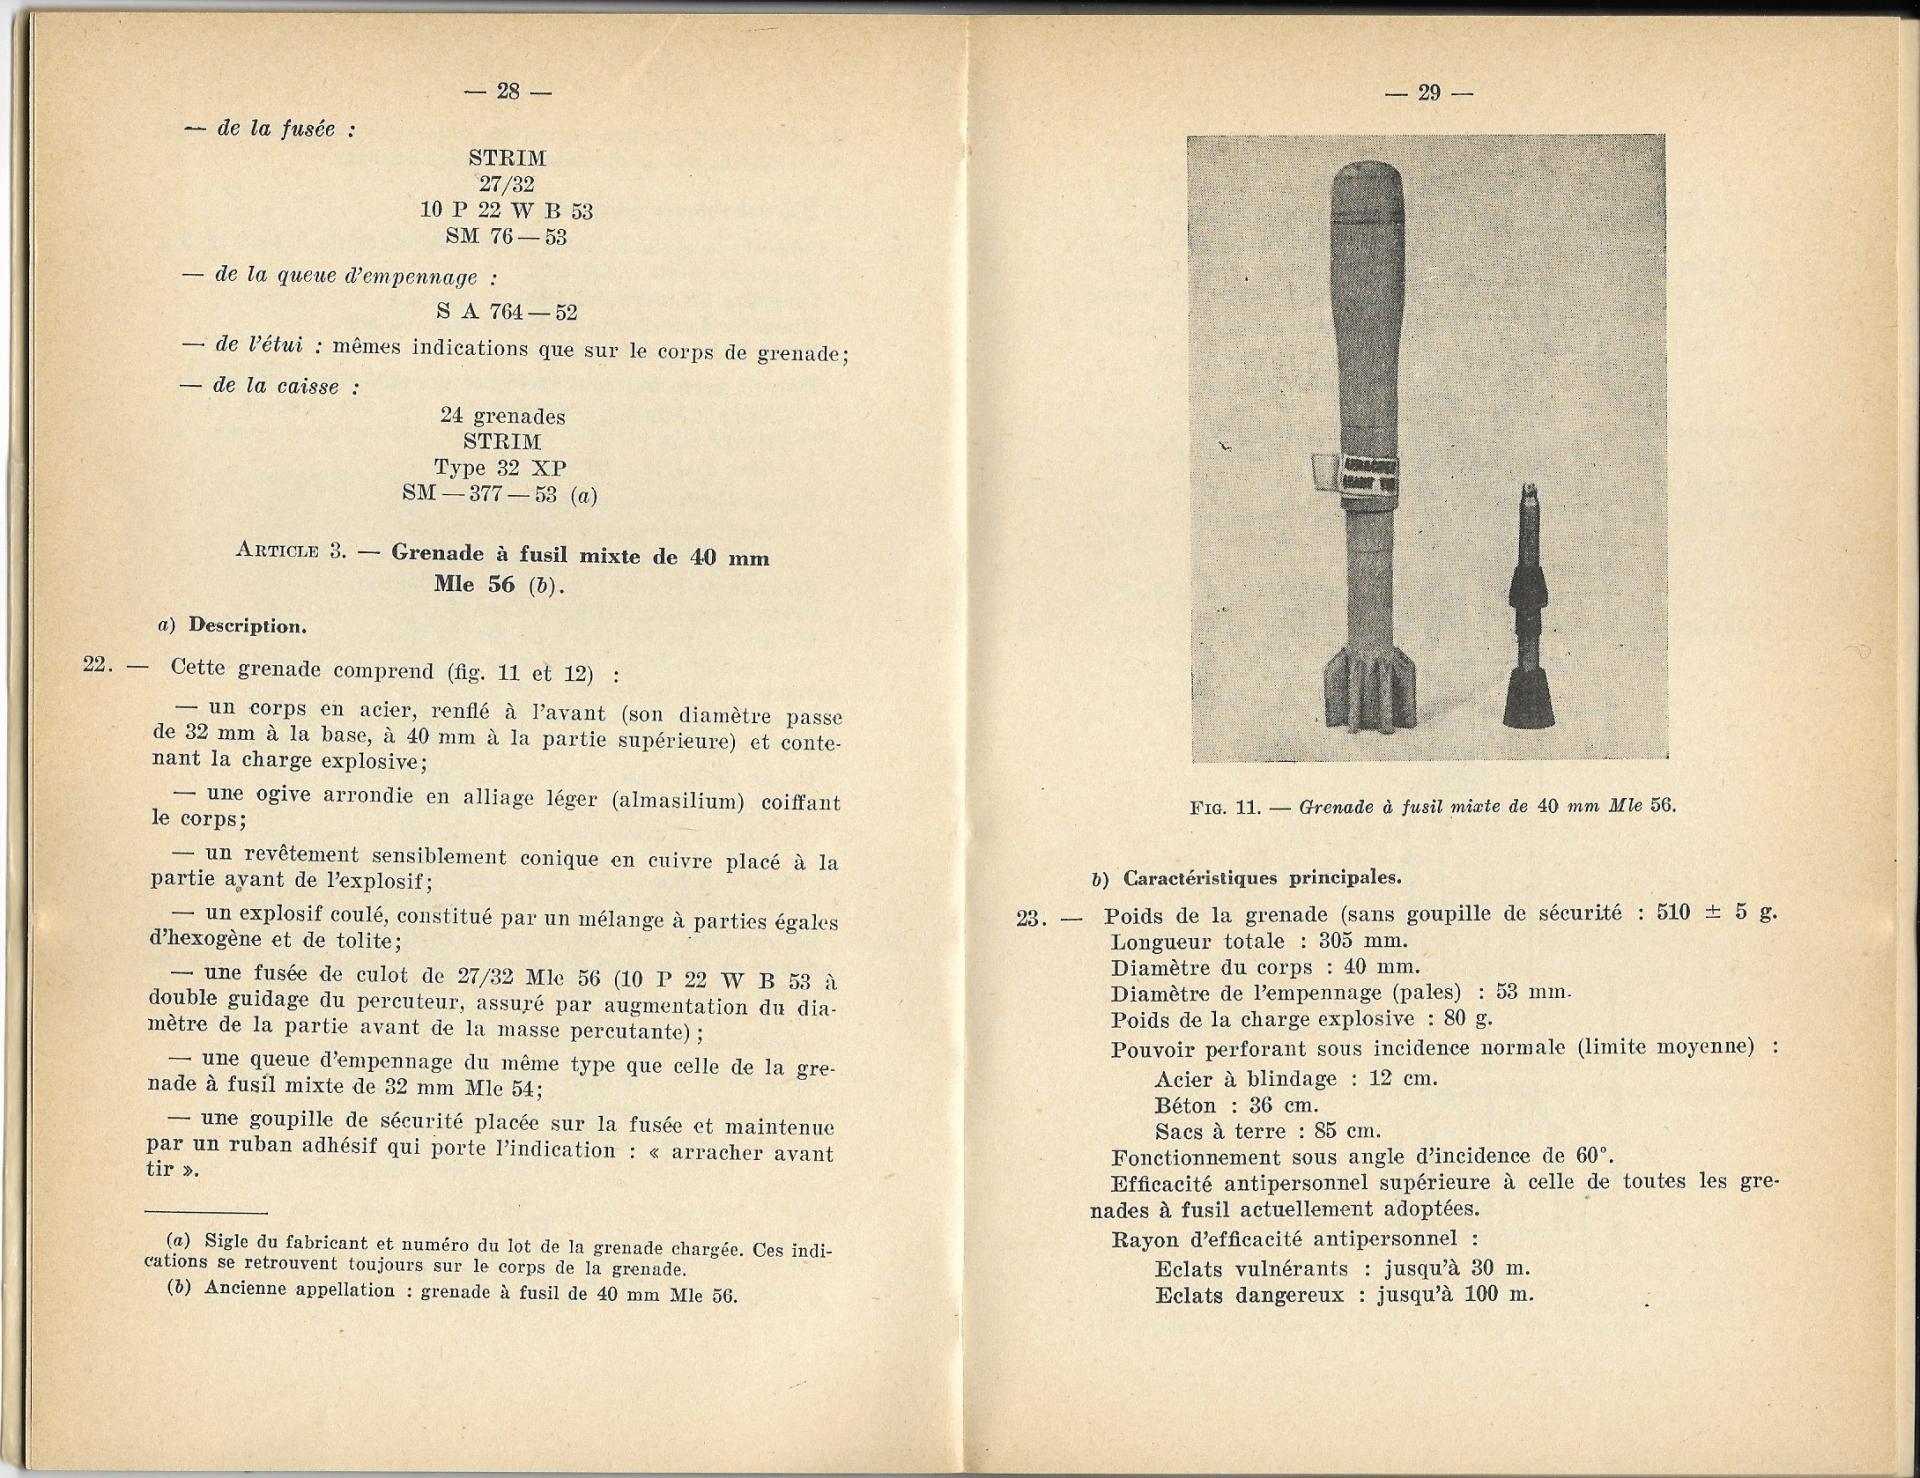 Grenades a fusil 1957 p28 29